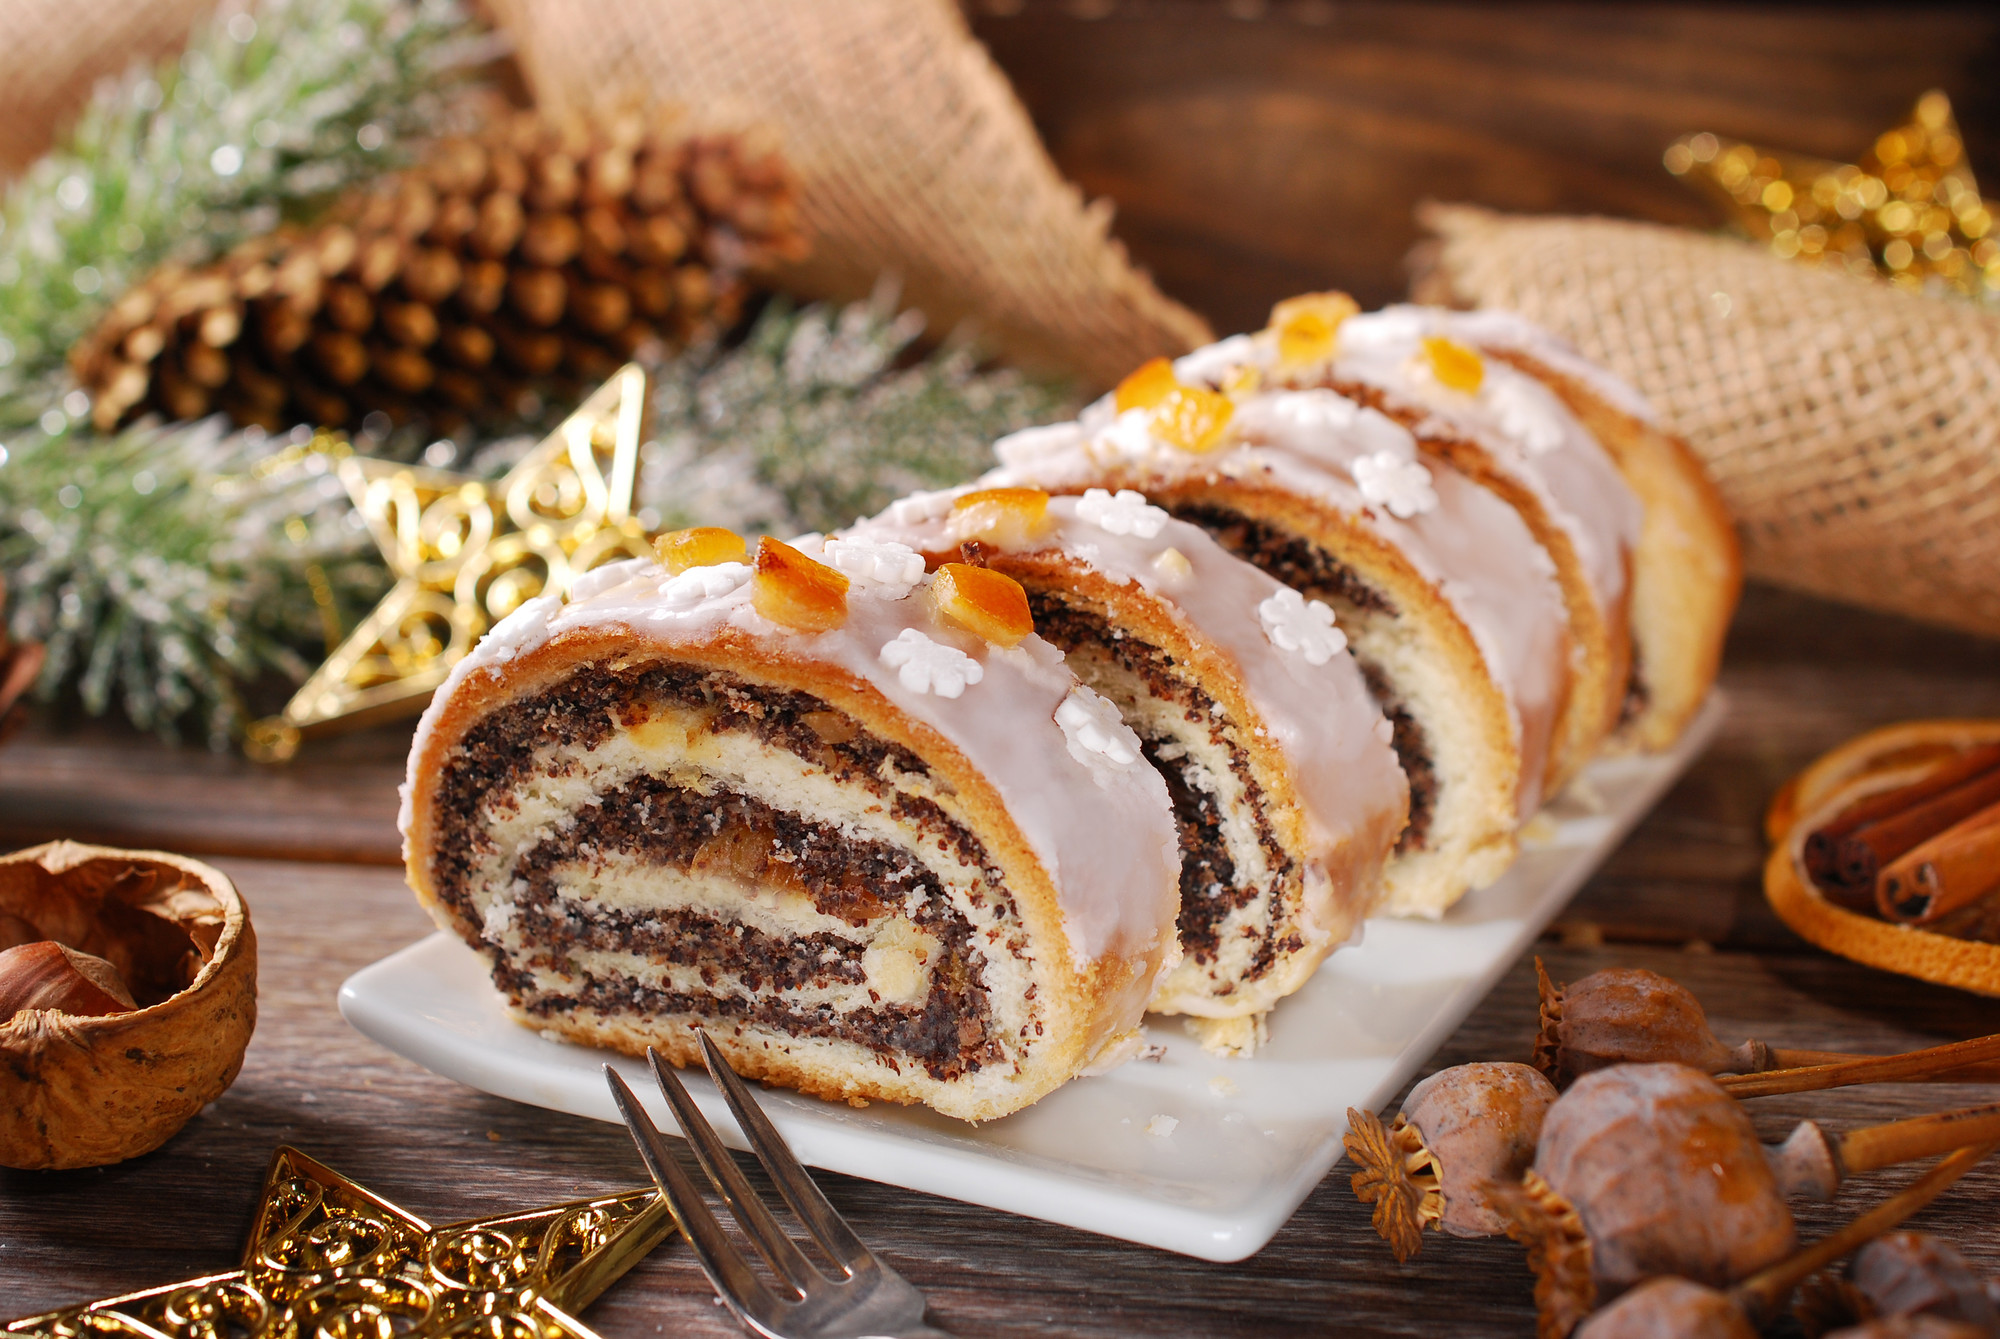 Polish Christmas Dessert Recipes - 18 Scrumptious Polish Dishes That